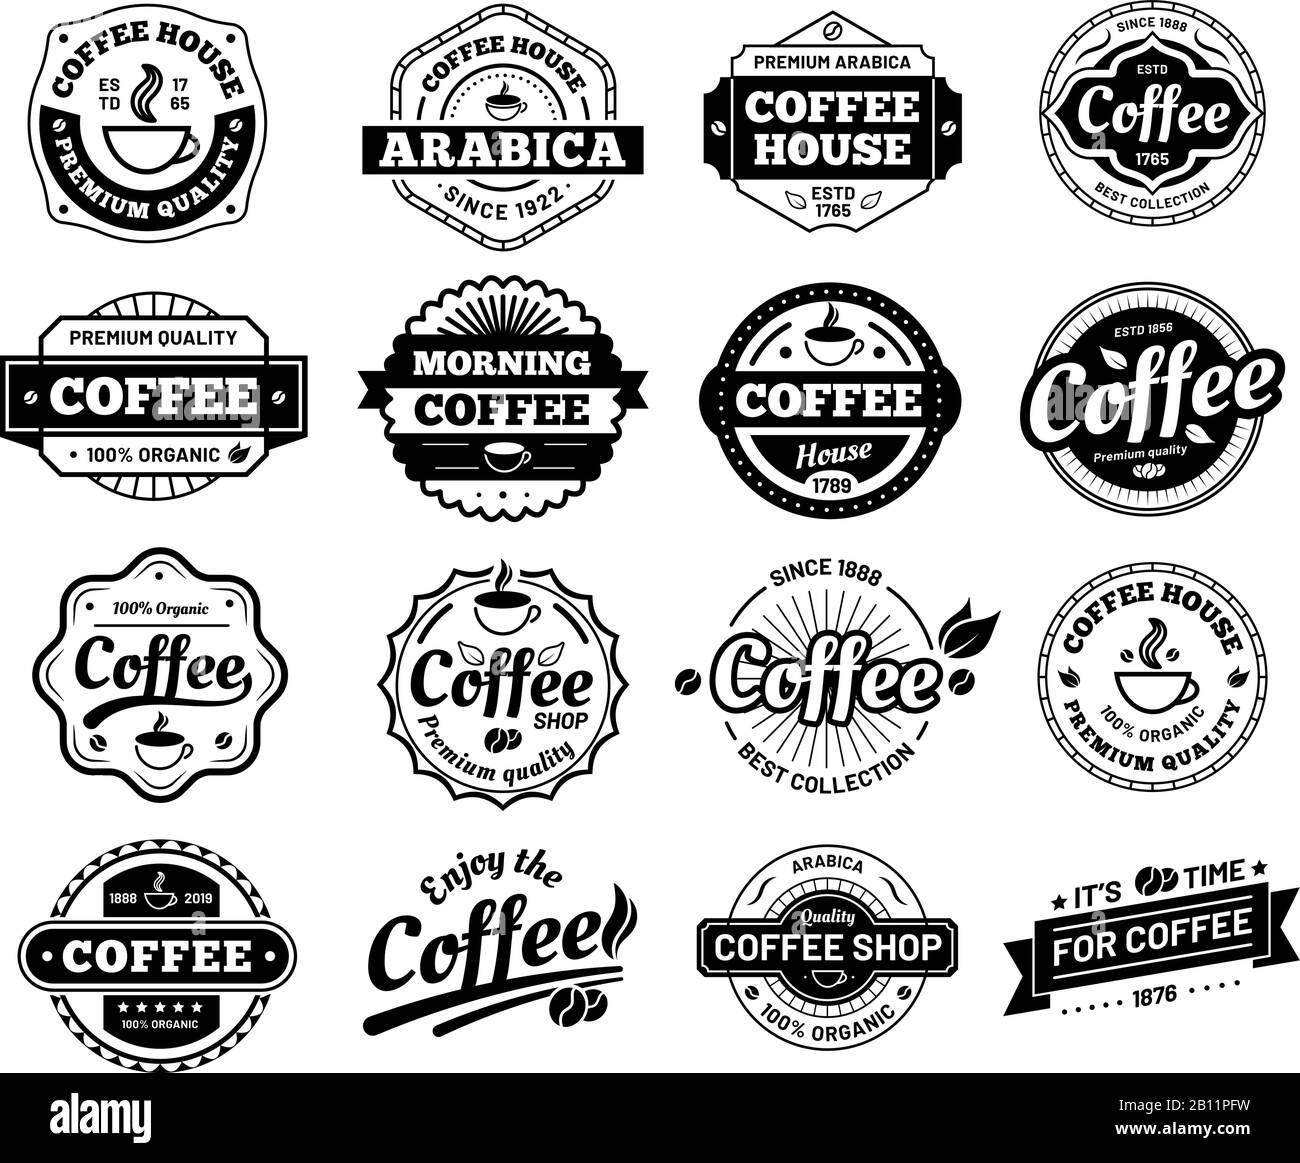 Premium Vector  Mister coffee logo template premium vector